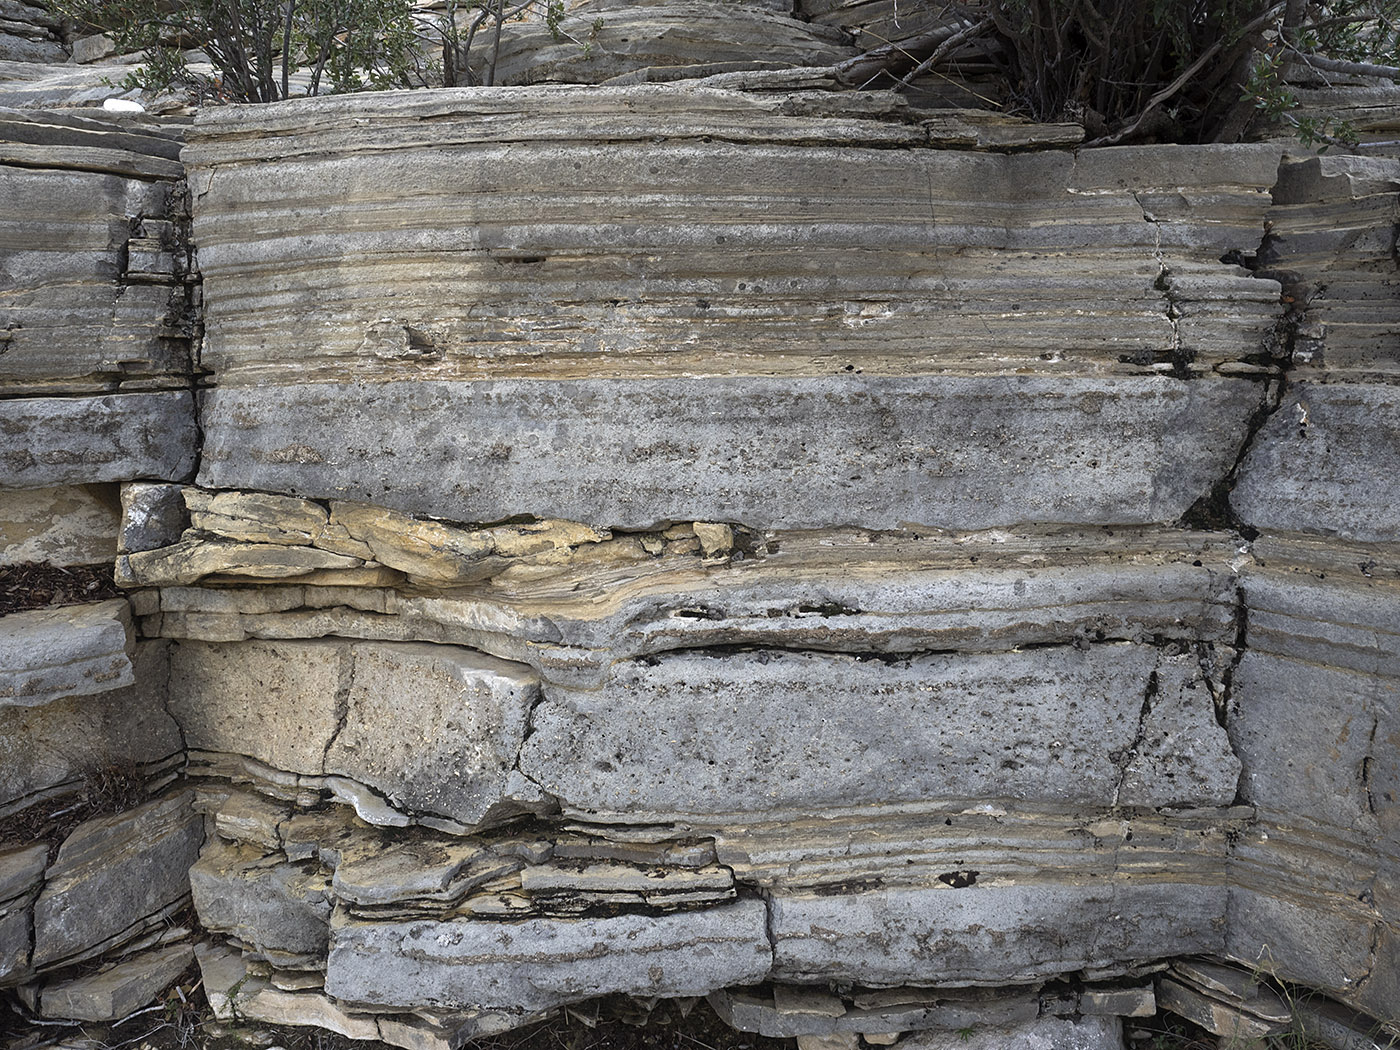 Fossil-rich limestone strata in McKittrick Canyon.